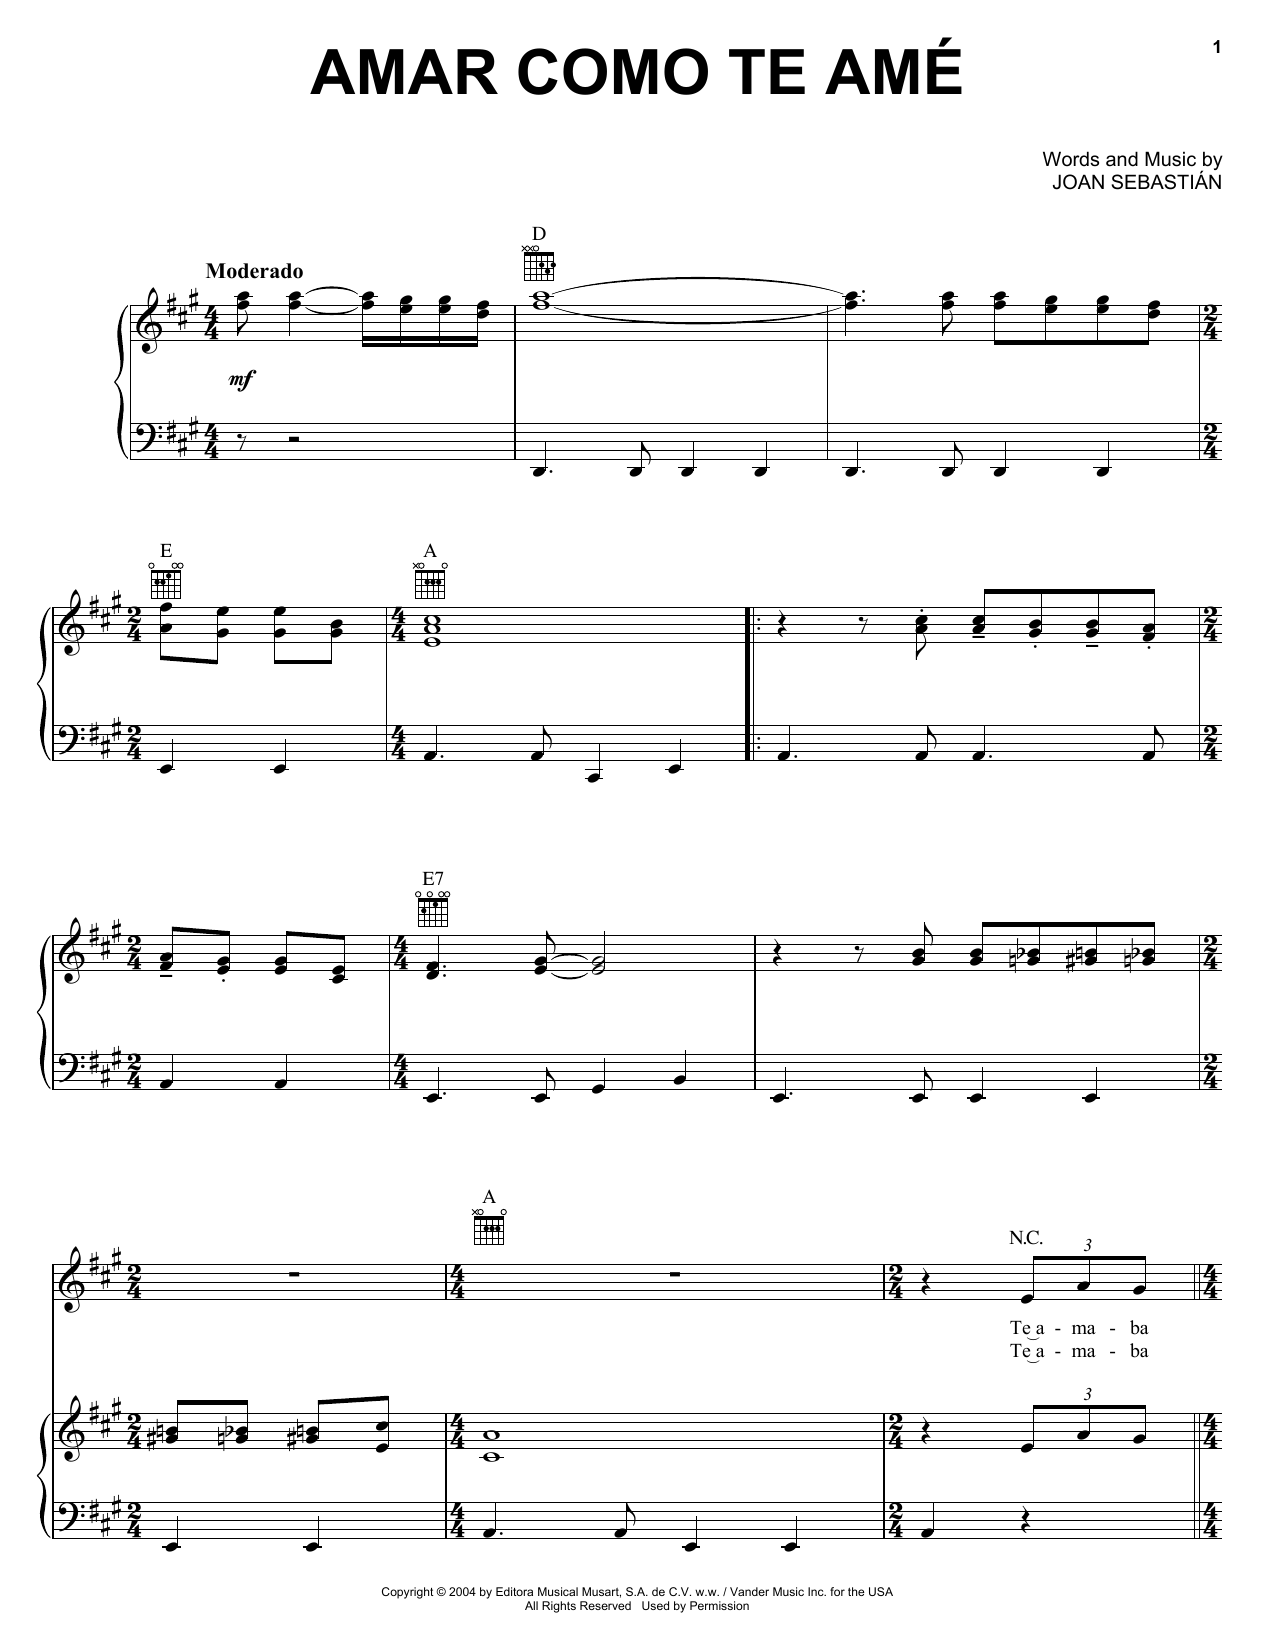 Joan Sebastian Amar Como Te Ame Sheet Music Notes & Chords for Piano, Vocal & Guitar (Right-Hand Melody) - Download or Print PDF